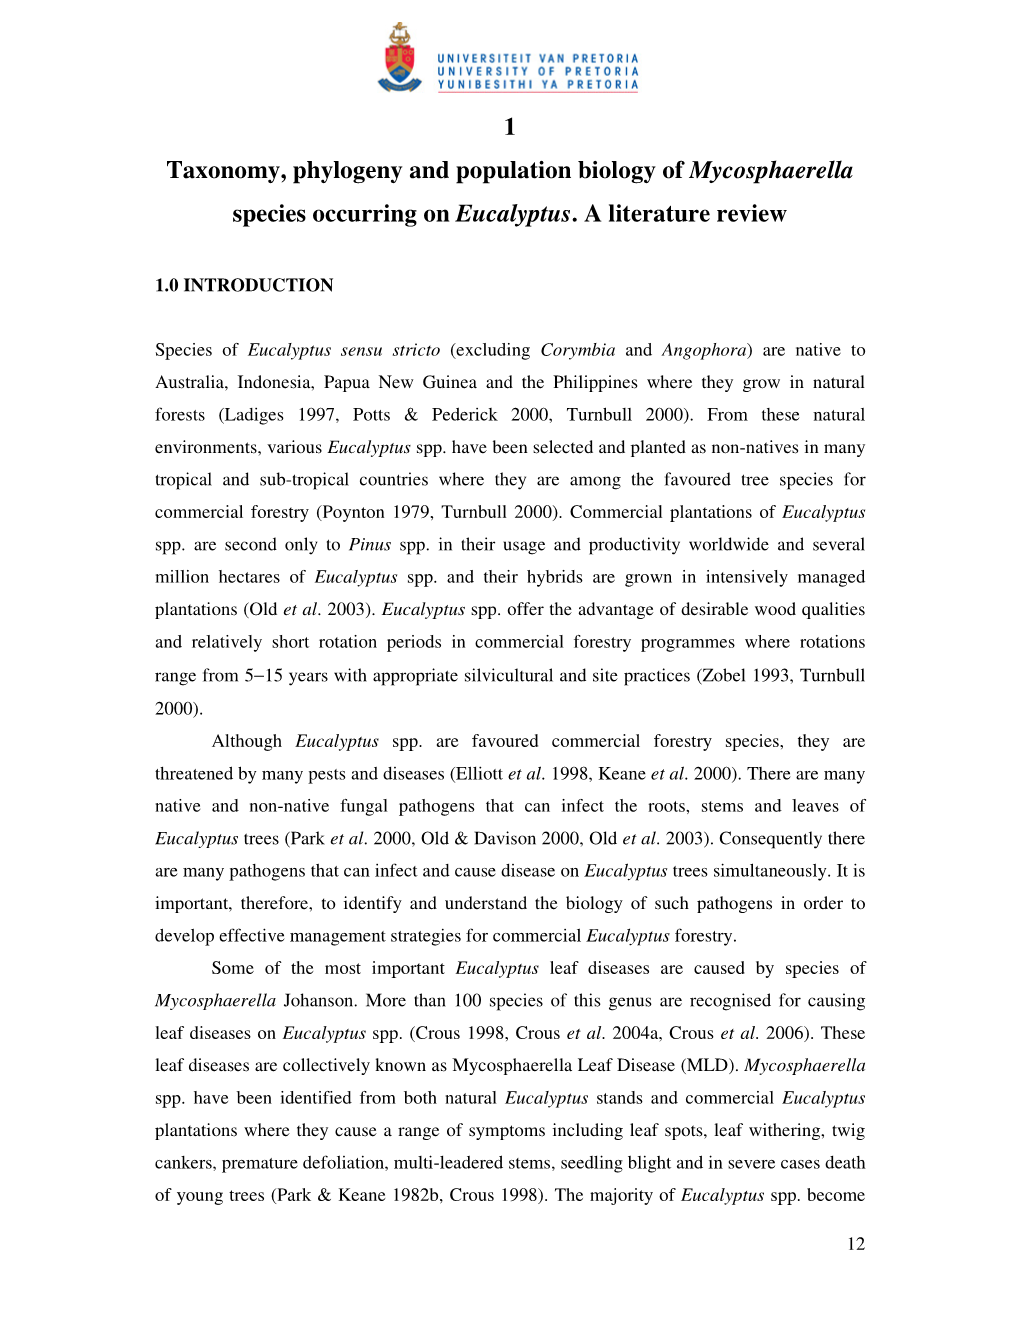 1 Taxonomy, Phylogeny and Population Biology of Mycosphaerella Species Occurring on Eucalyptus